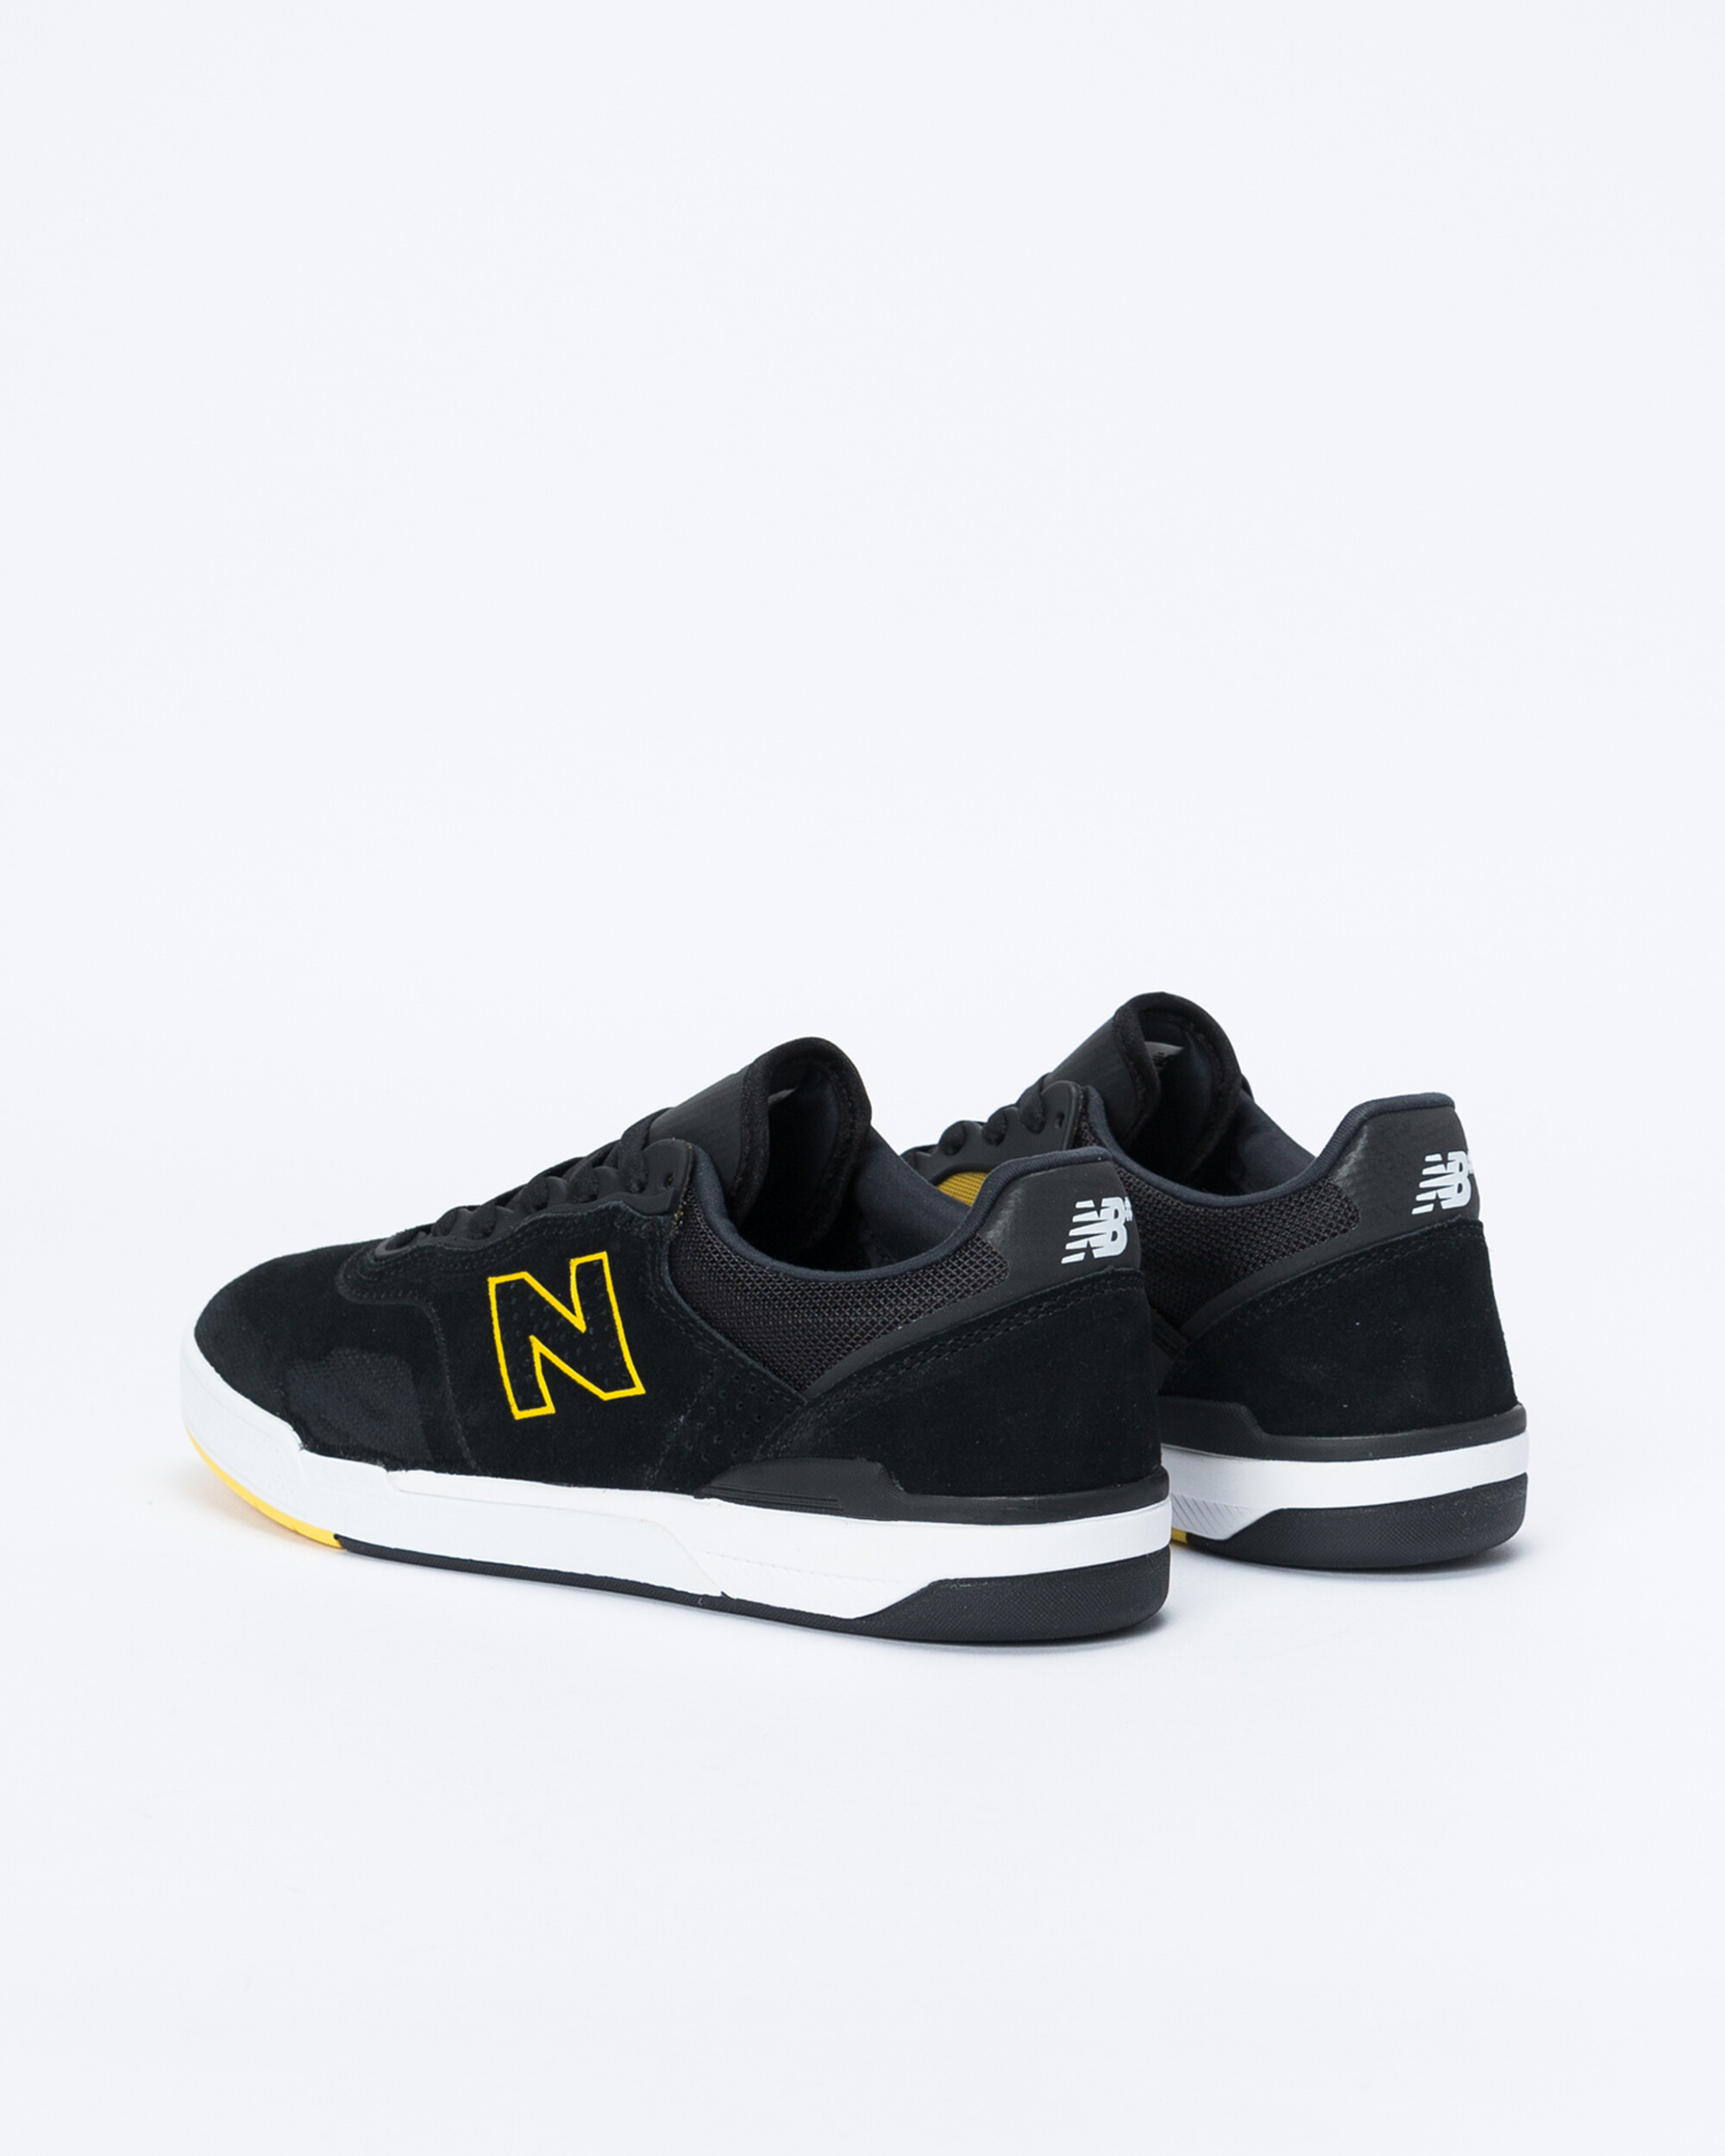 New Balance NM913 Leather/Textile BLACK/YELLOW